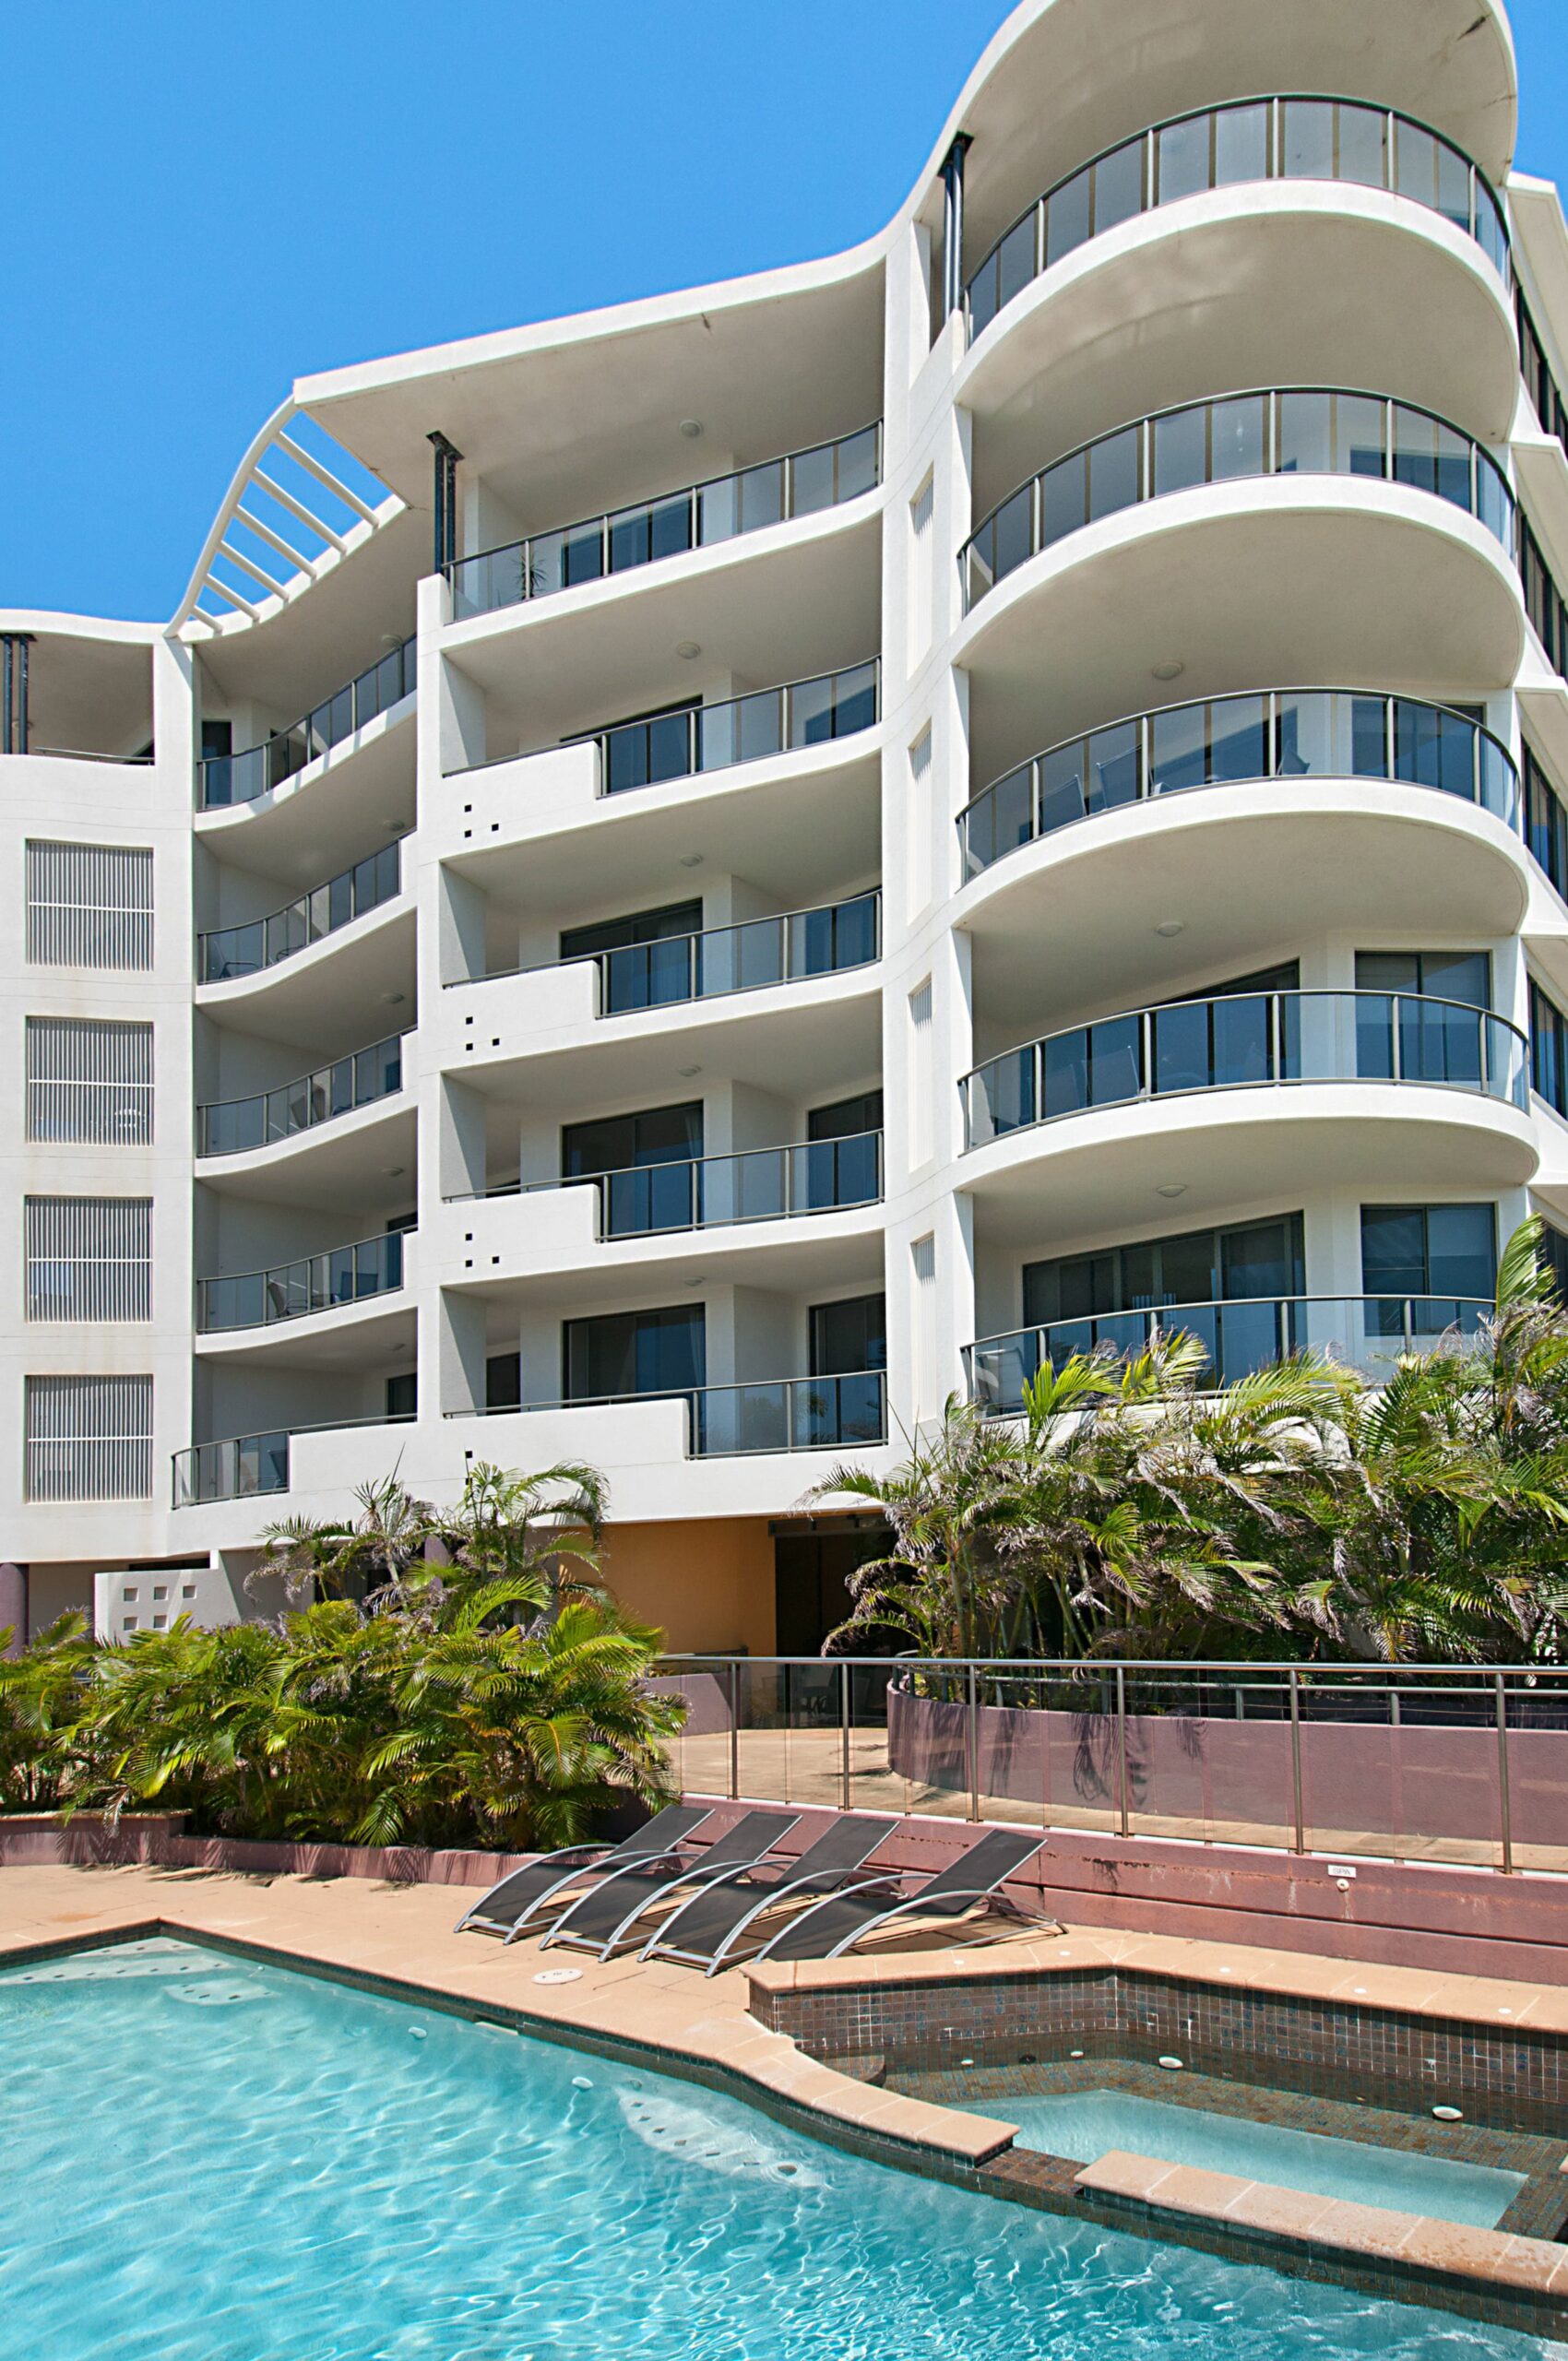 Meridian Alex Beach Apartments